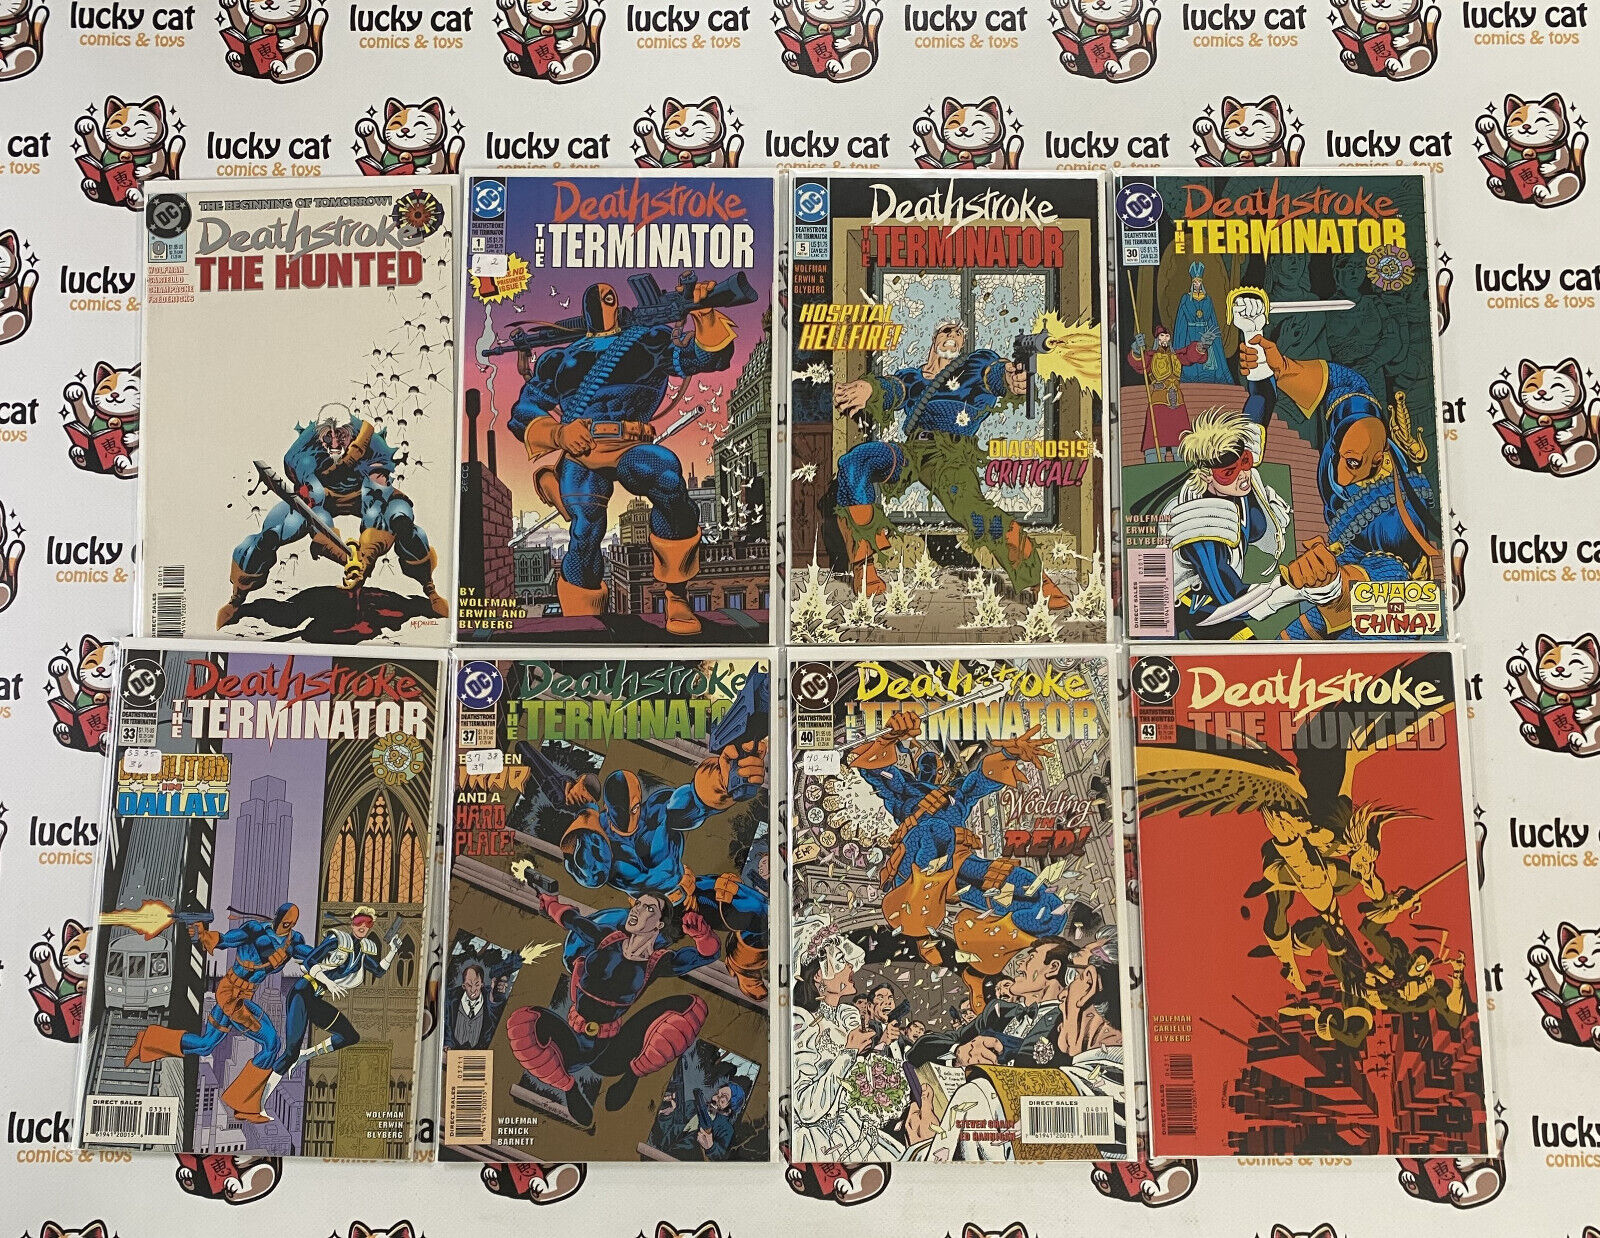 DEATHSTROKE THE TERMINATOR (1991) [DC Comics] #0-12, 17-57, 59 (54 book lot)